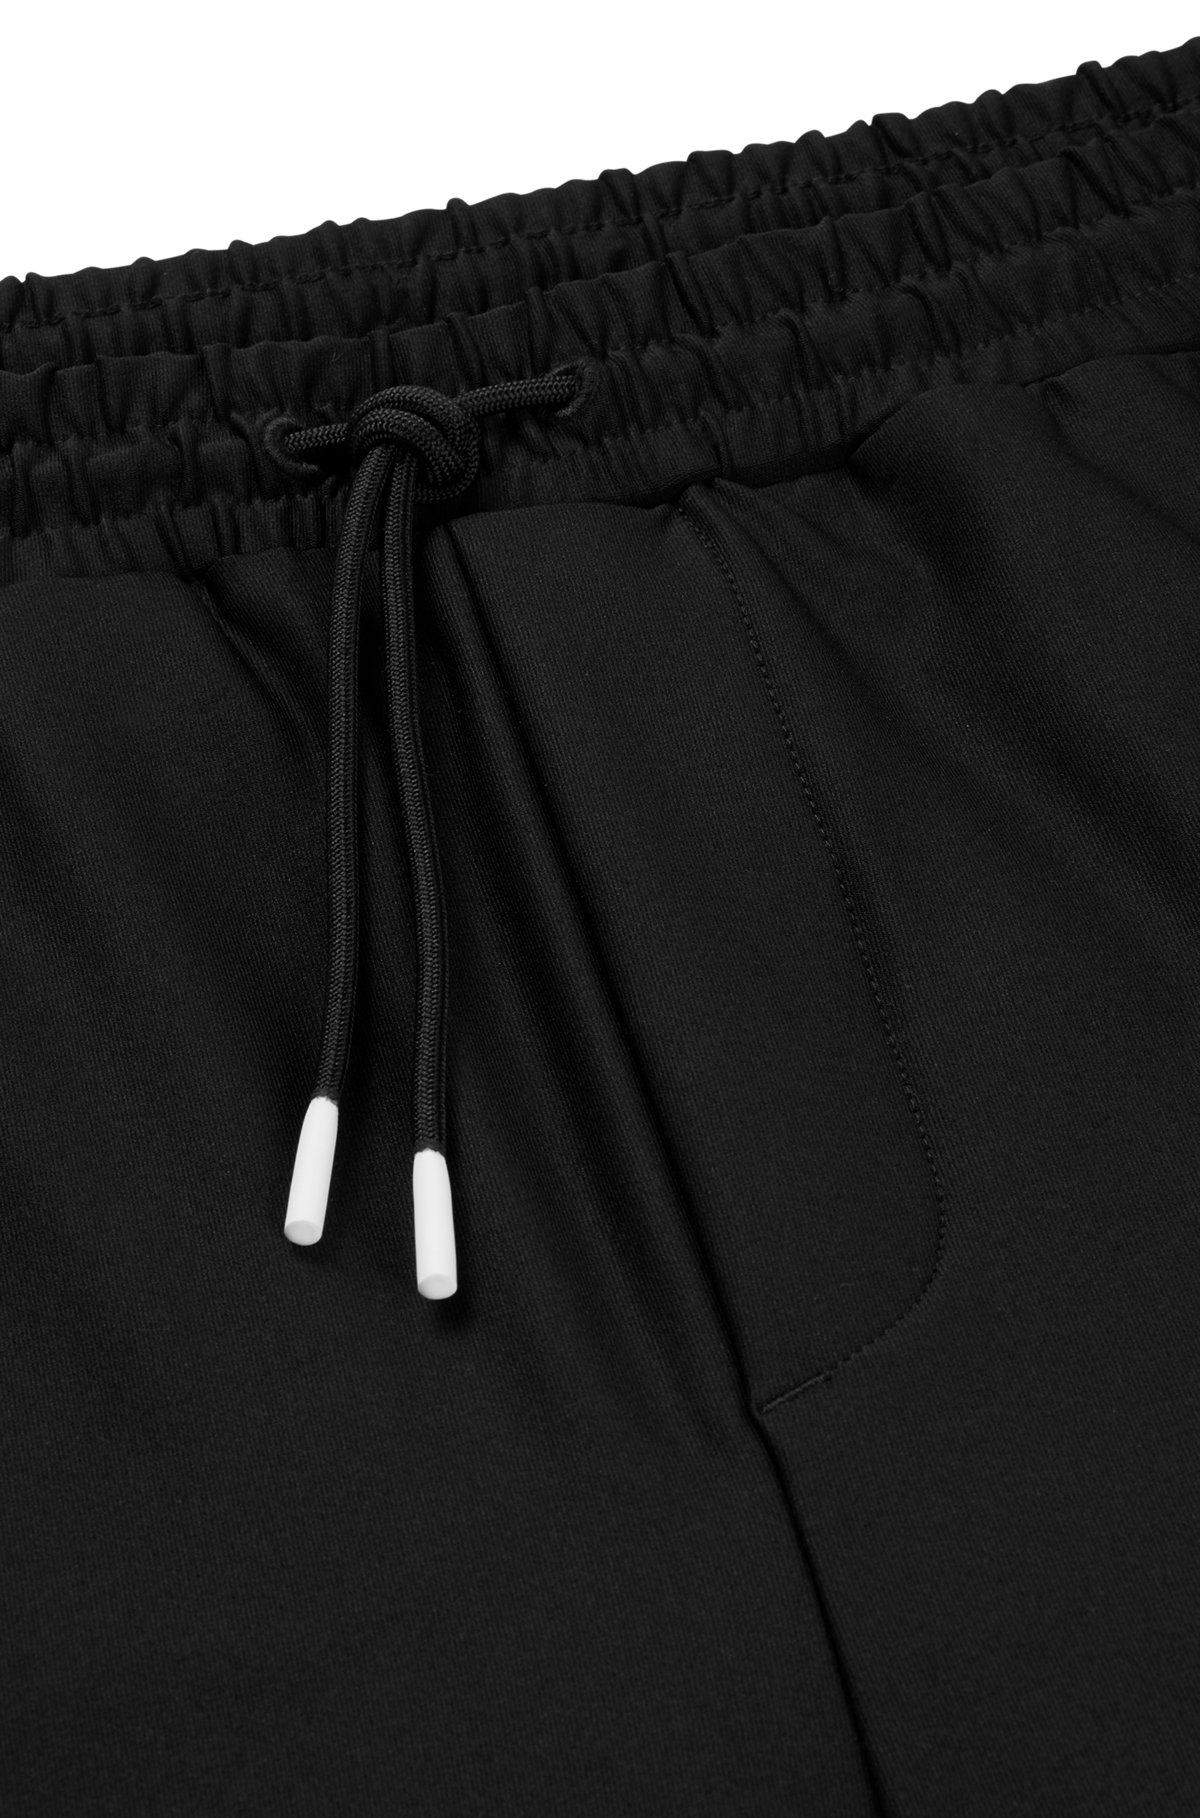 BOSS x Matteo Berrettini logo tracksuit bottoms with signature stripes and cuffed hems, Black